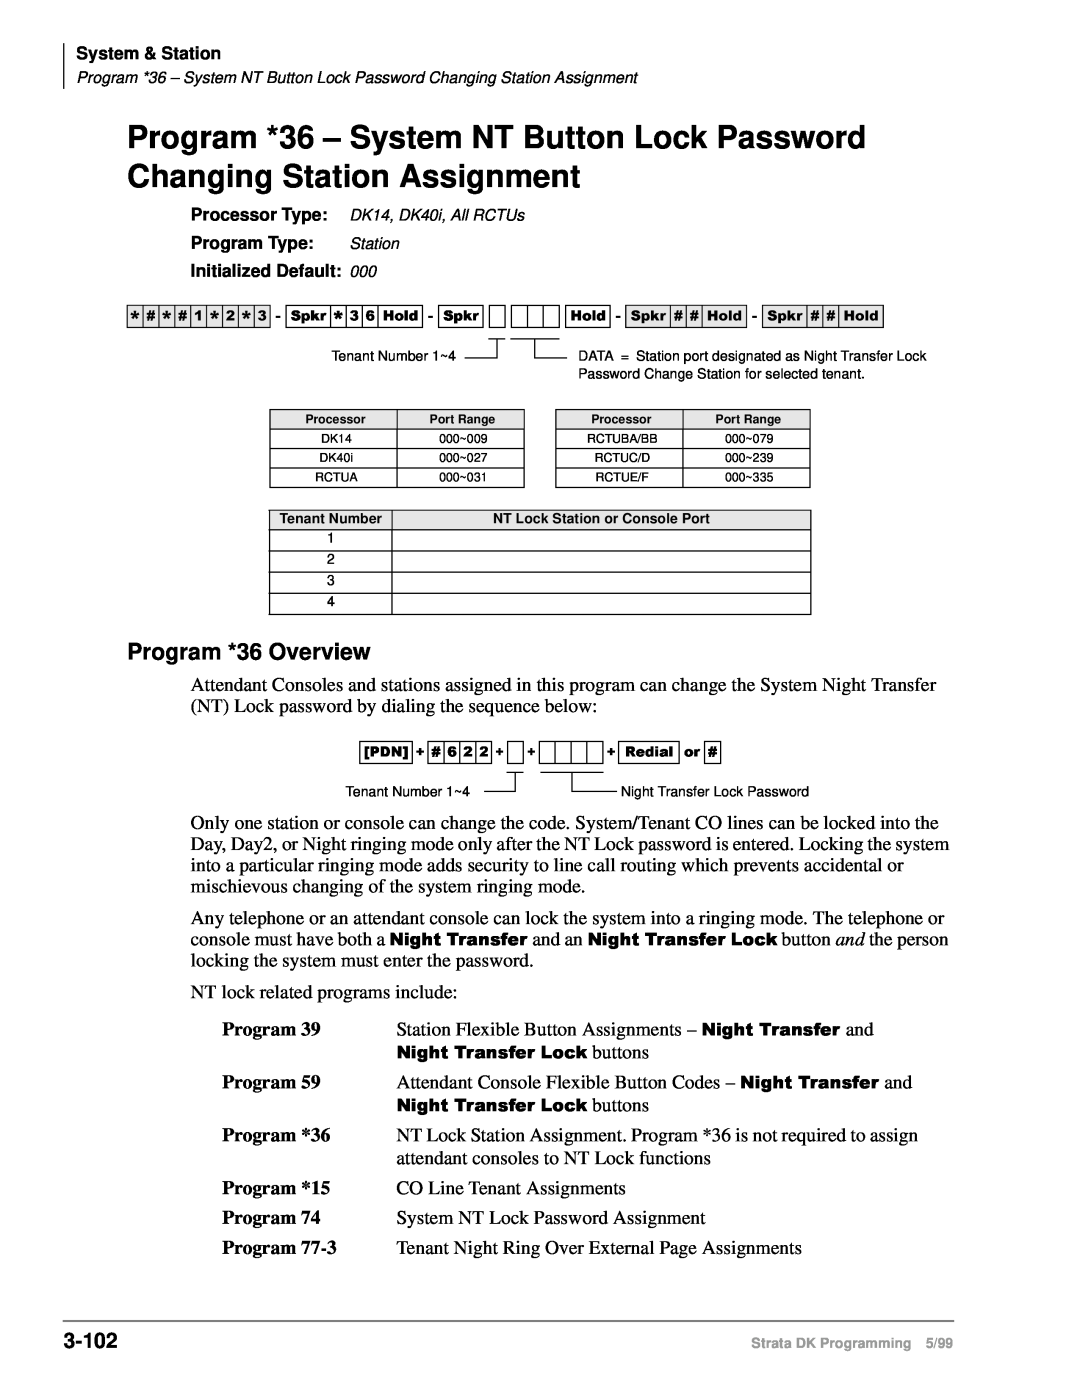 Toshiba dk14 manual 31@, 5HGLDORU, Program *36 Overview, 3-102, 6SNU +ROG6SNU+ROG6SNU+ROG6SNU+ROG 